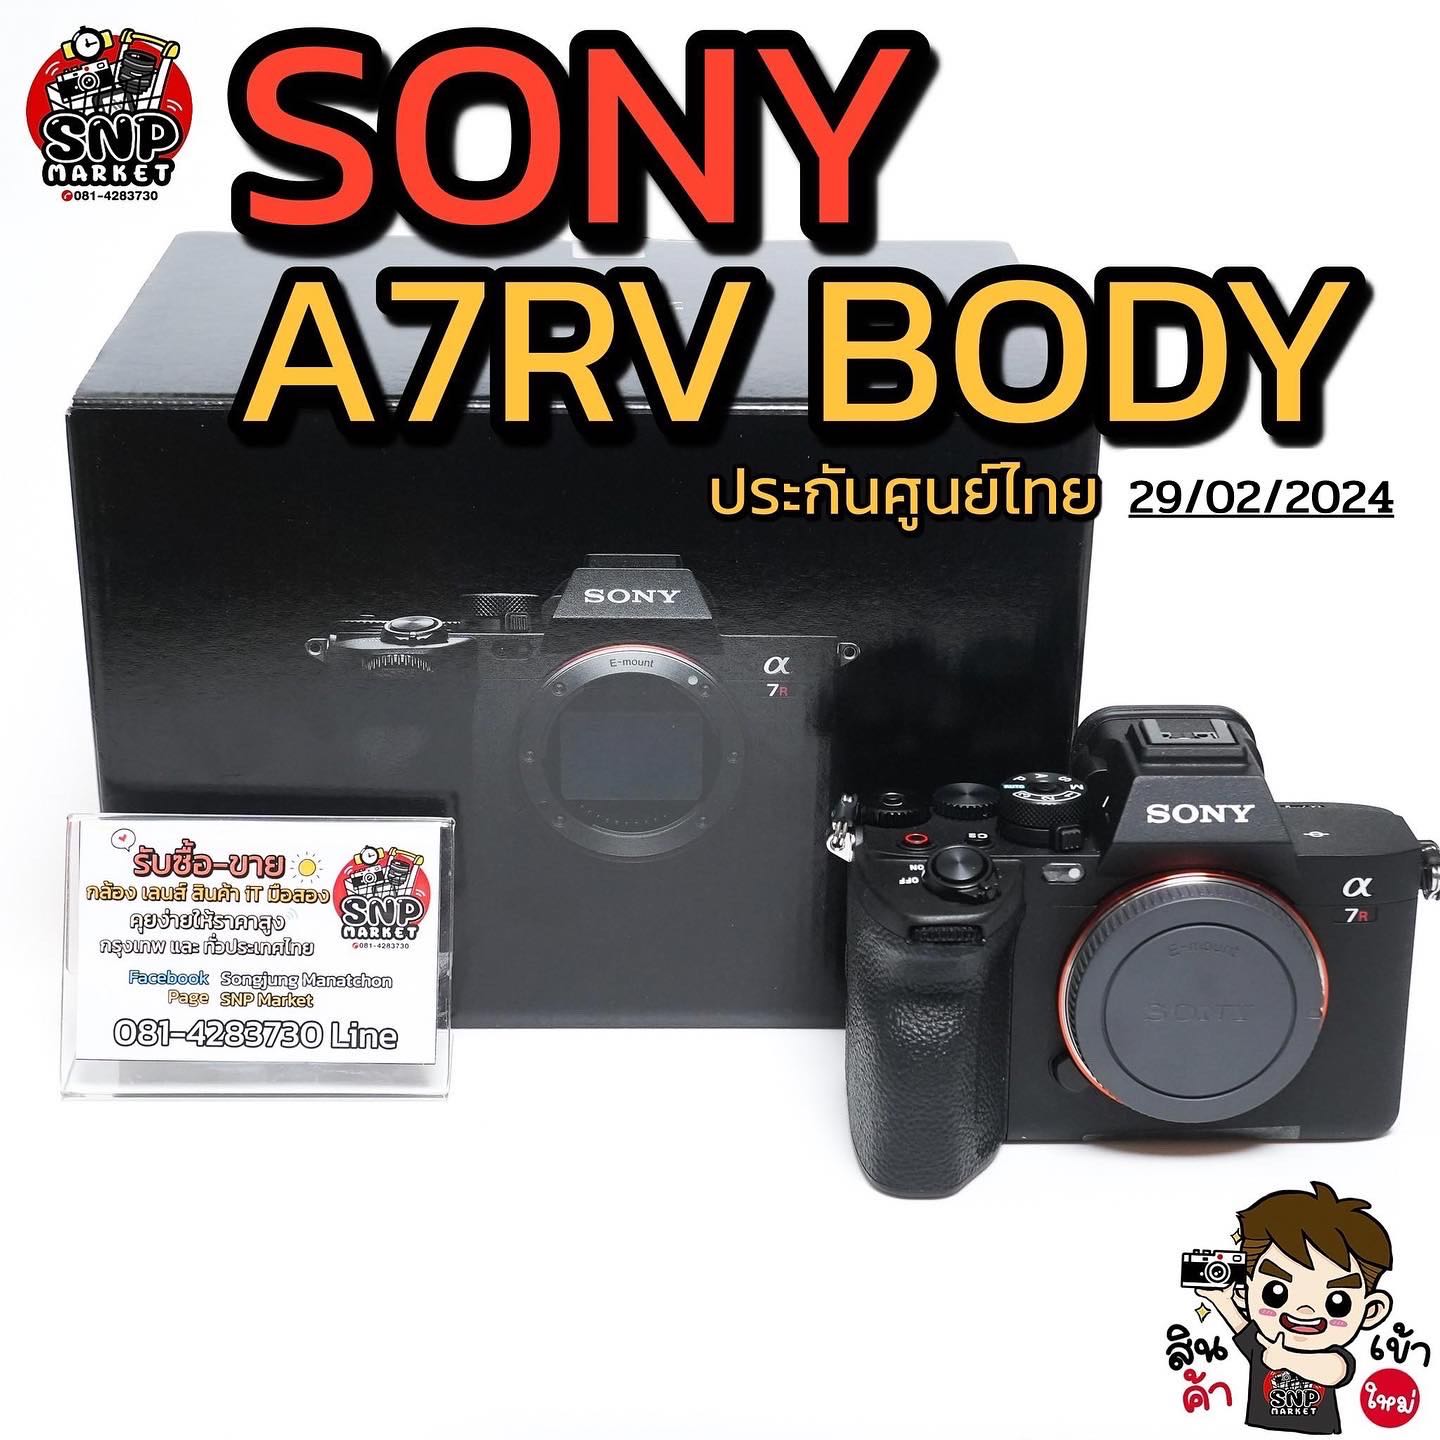 Sony A7RV Body ประกันศูนย์ 29/02/2024